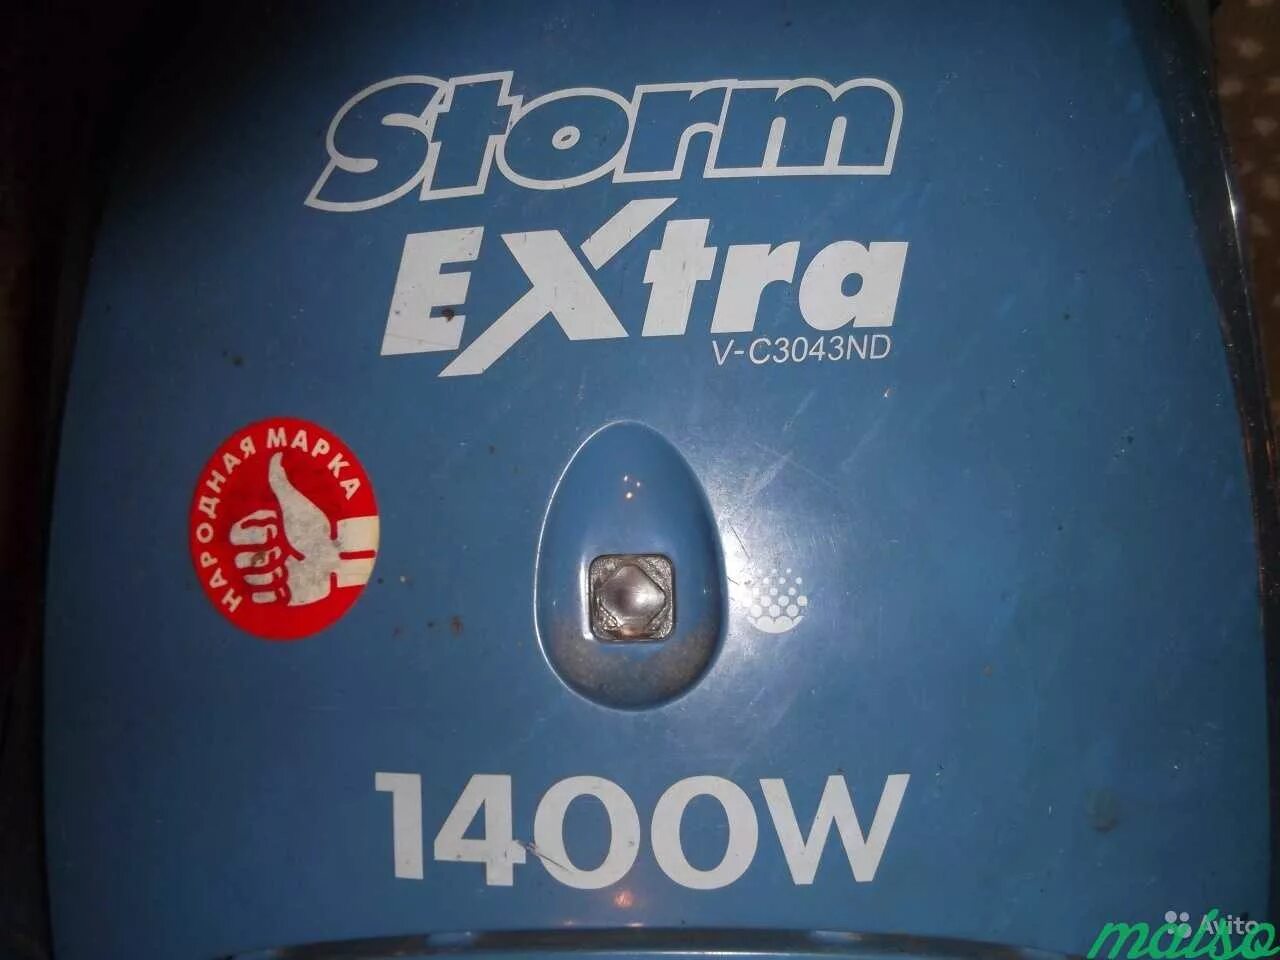 Storm extra